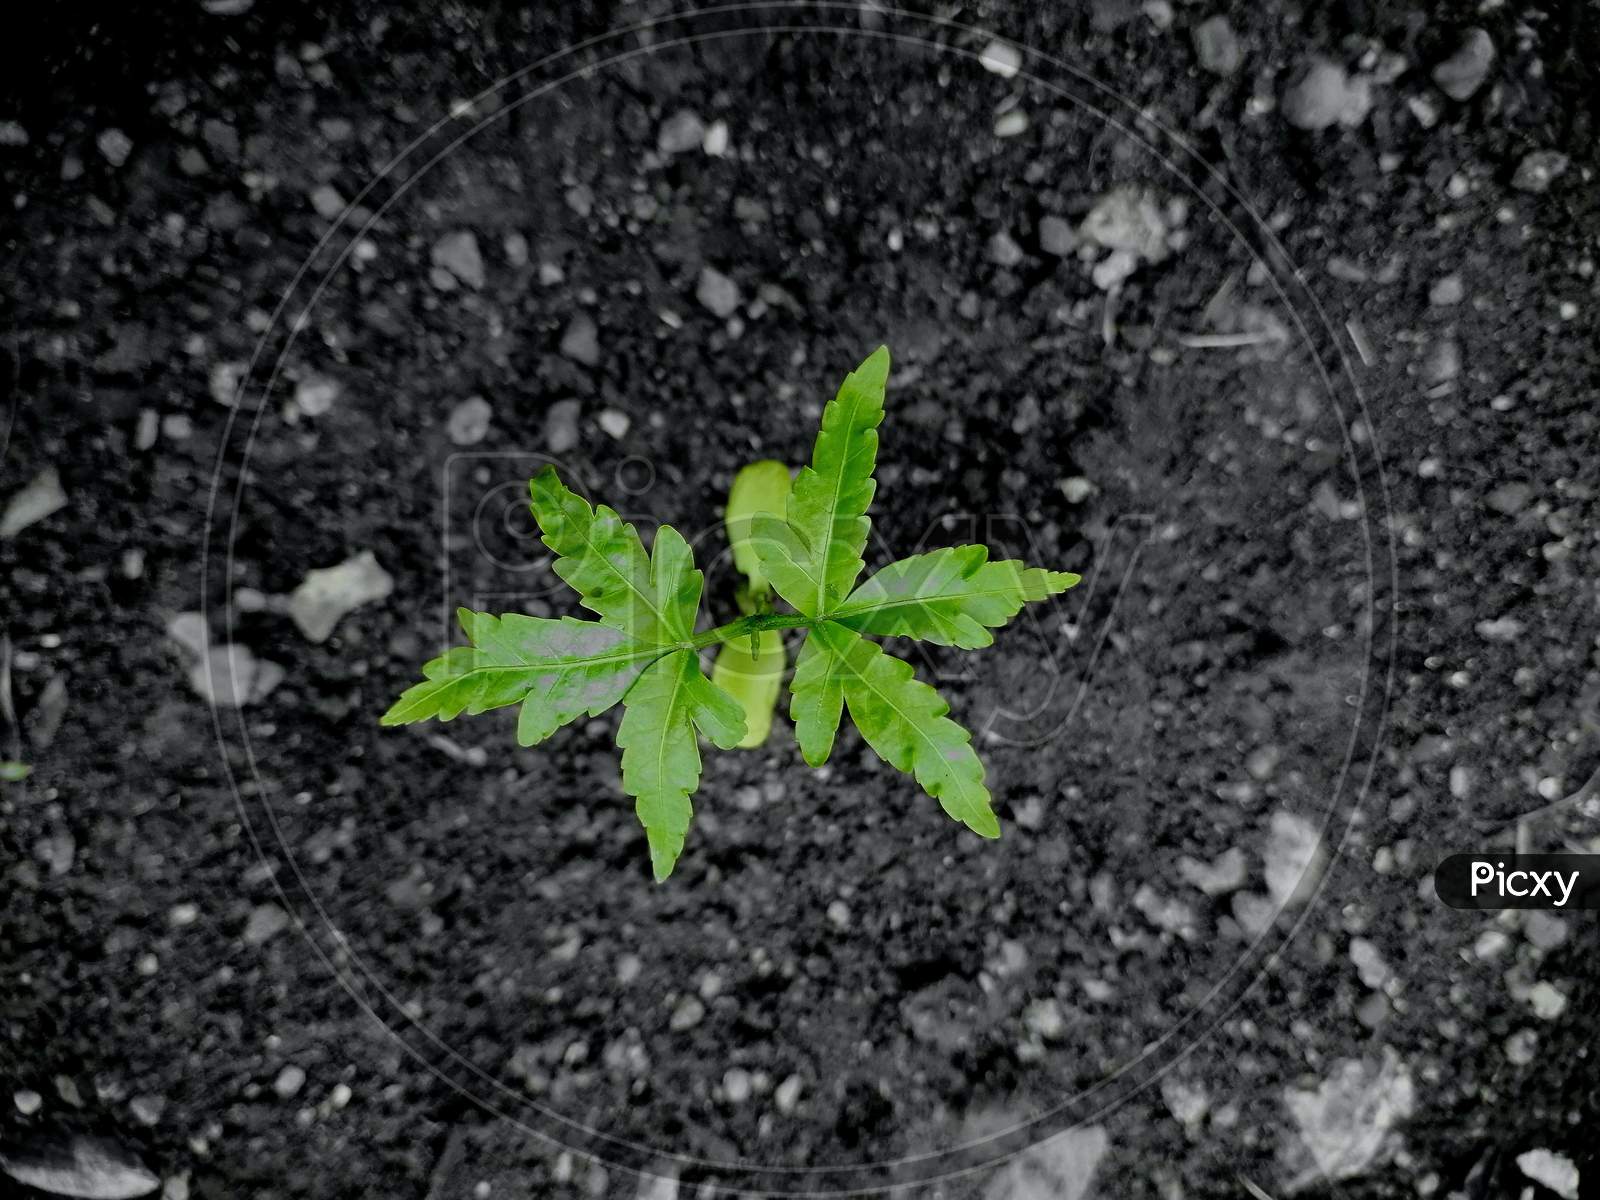 Green neem plant